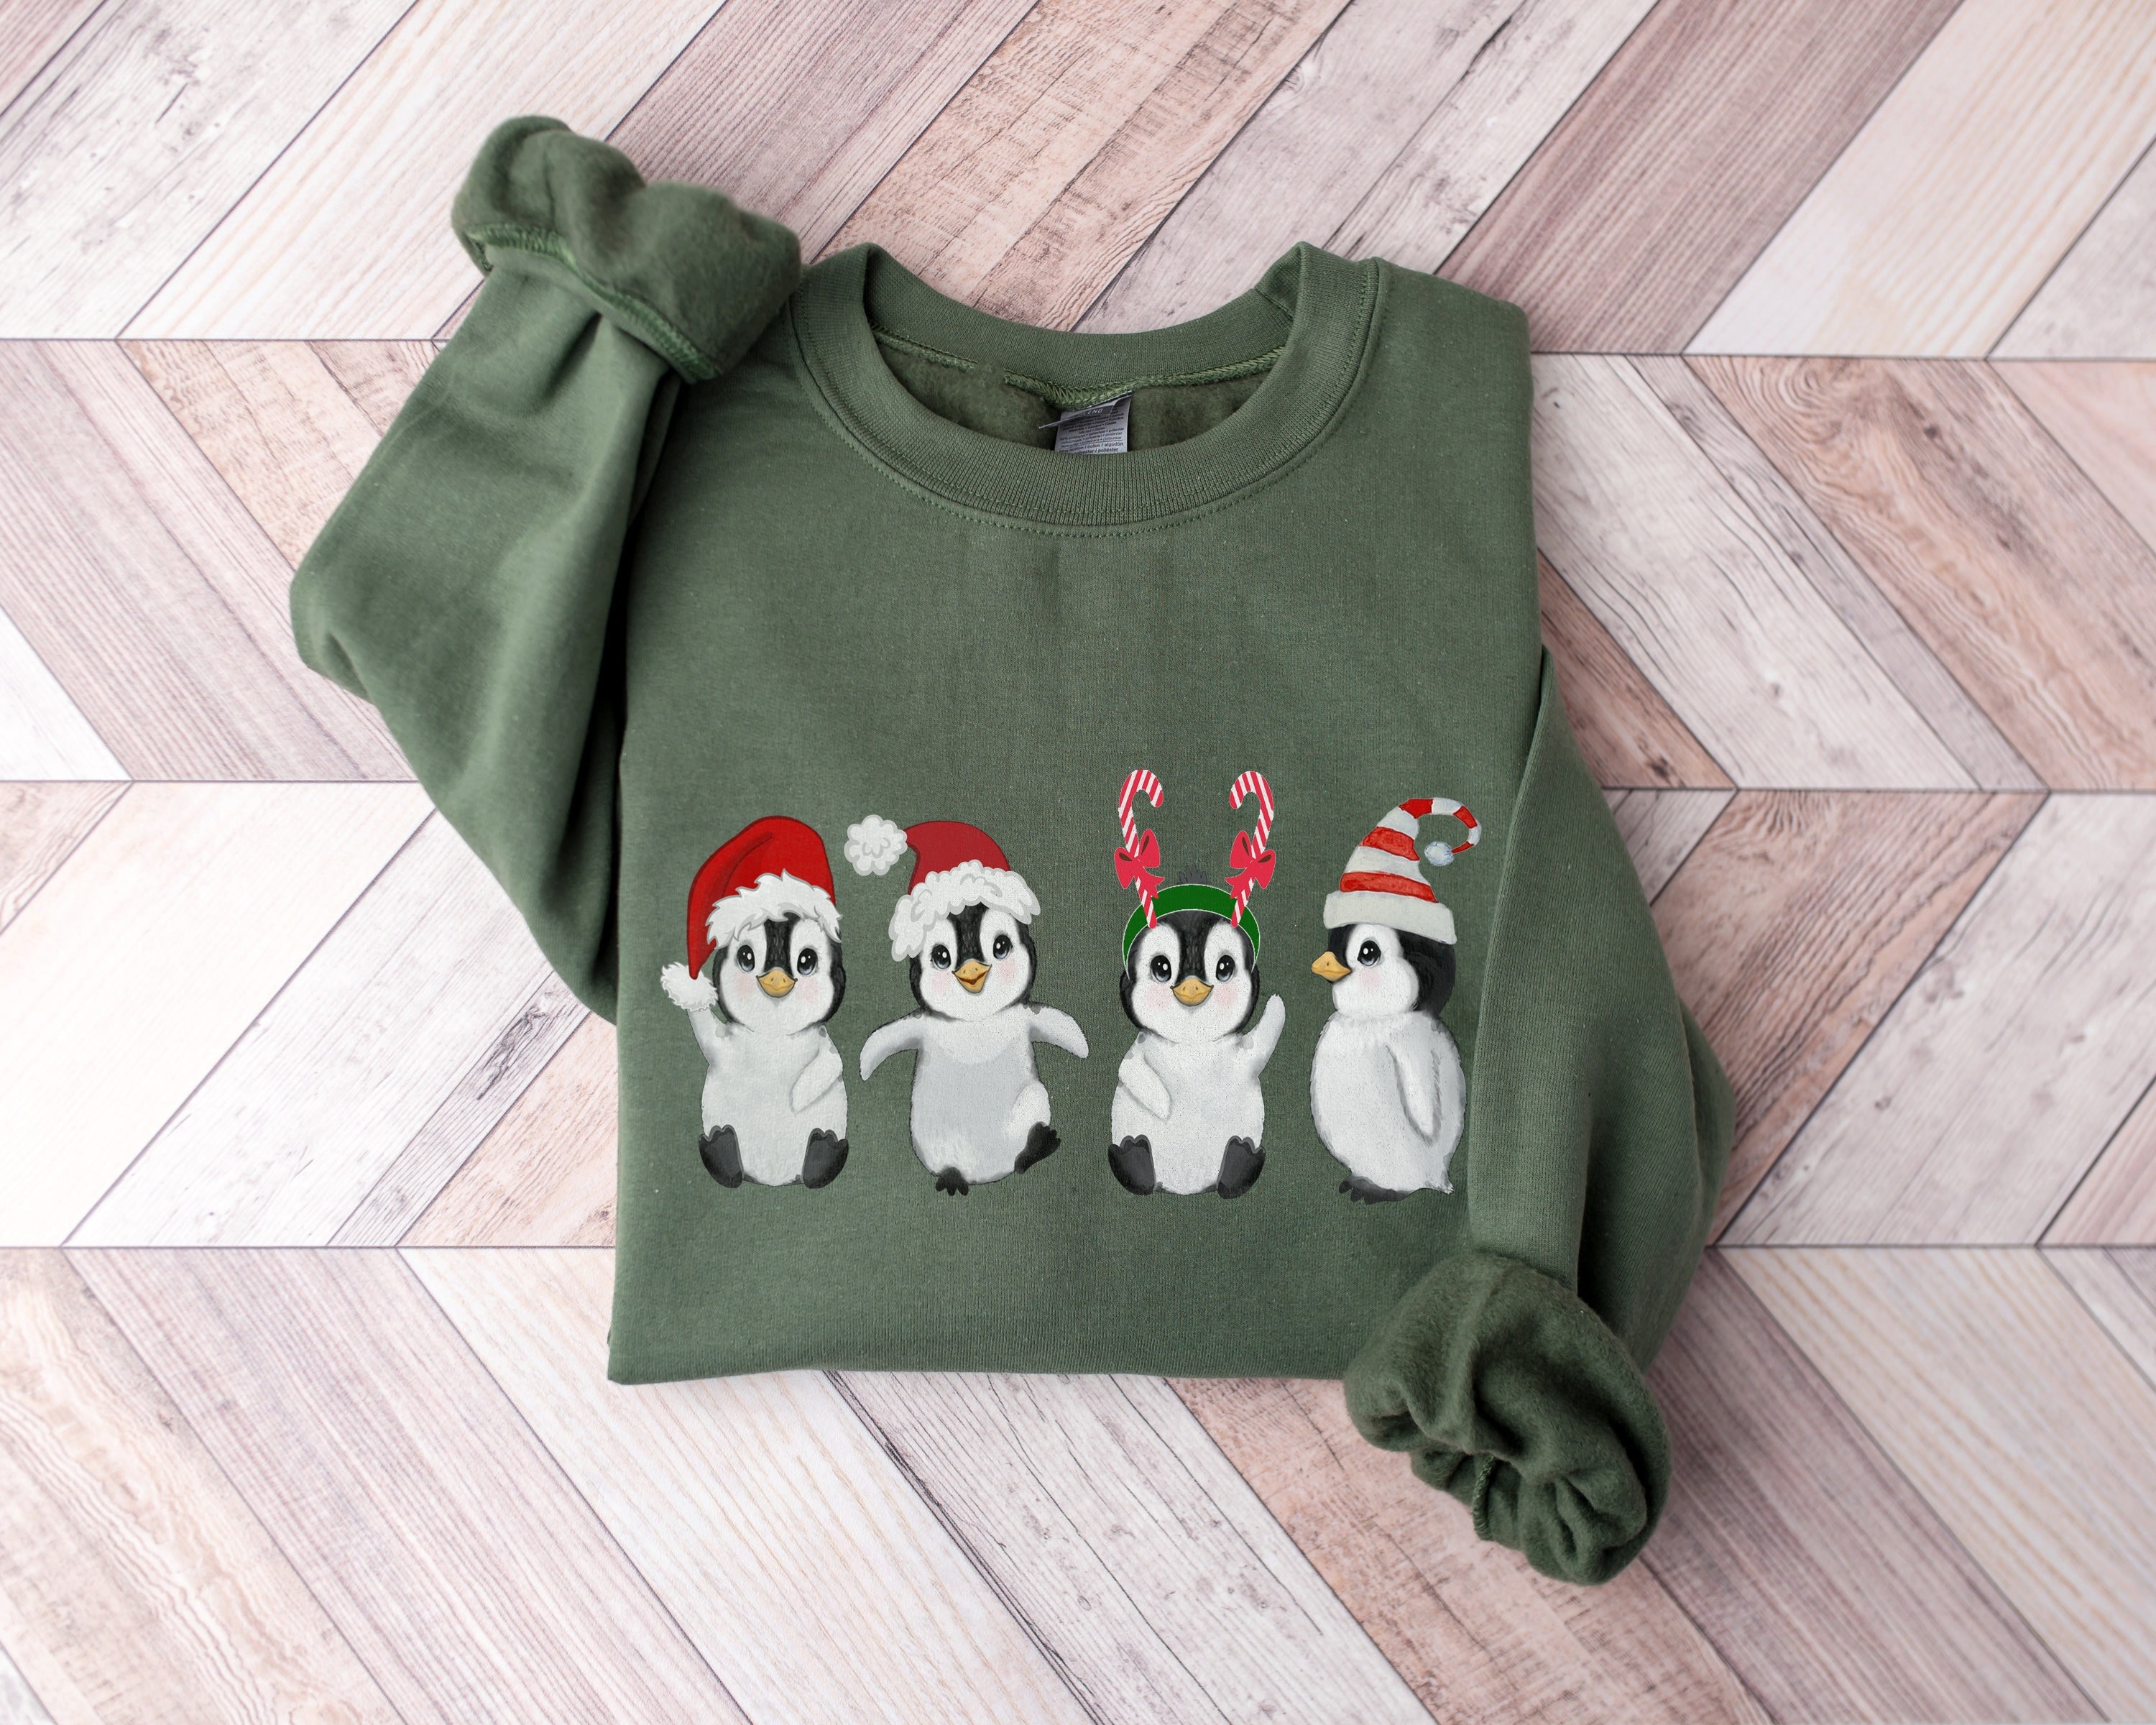 Pittsburgh Penguins Snowflakes Reindeer 3D Sweater Custom Number And Name